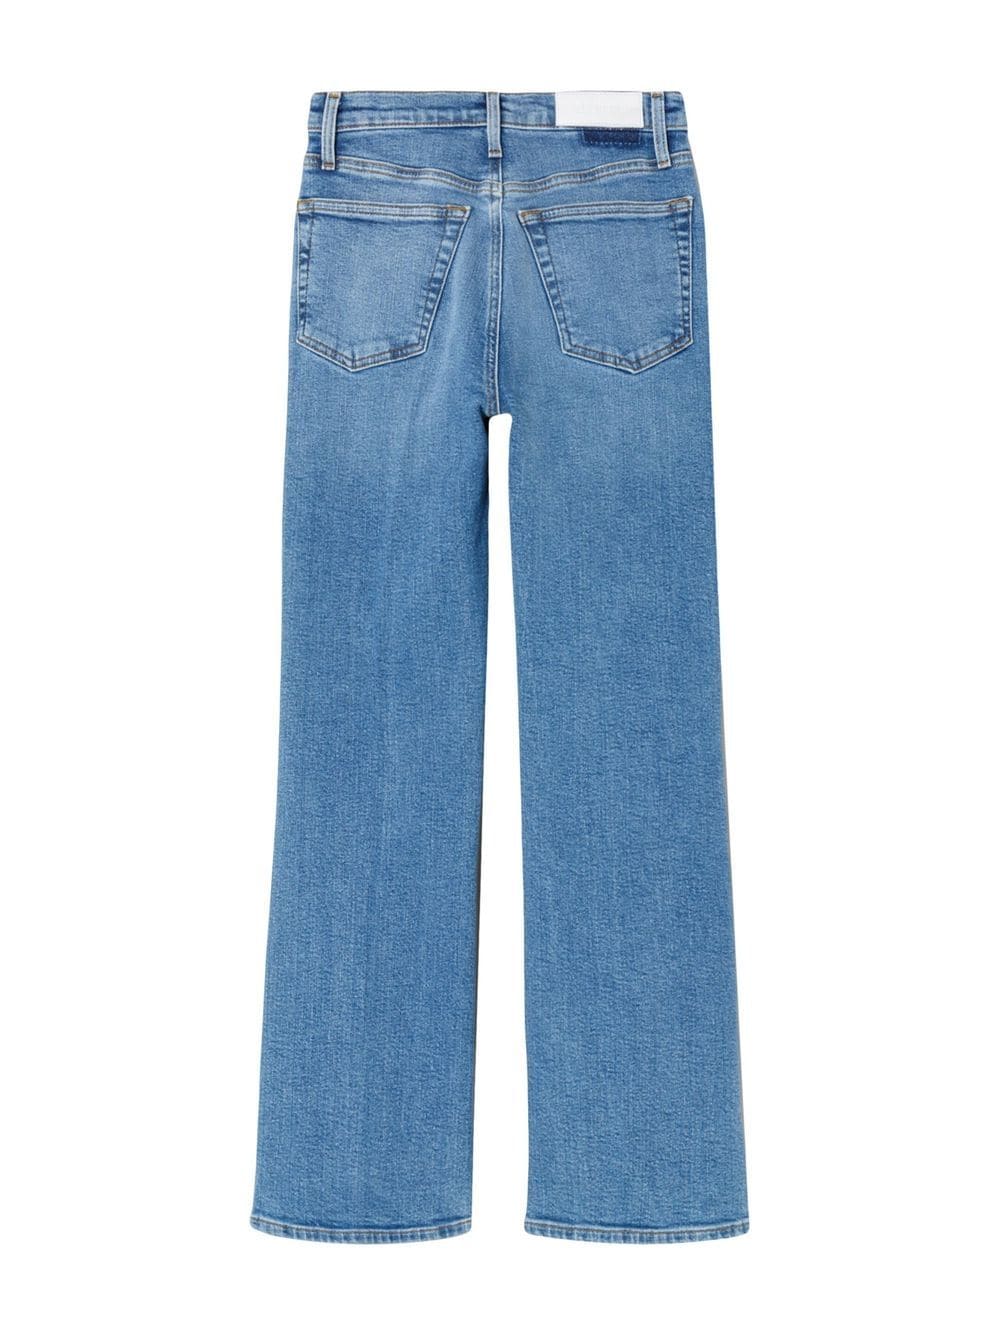 70s Blue Light Wash Denim Culottes Vintage Cropped Wide Leg Jean